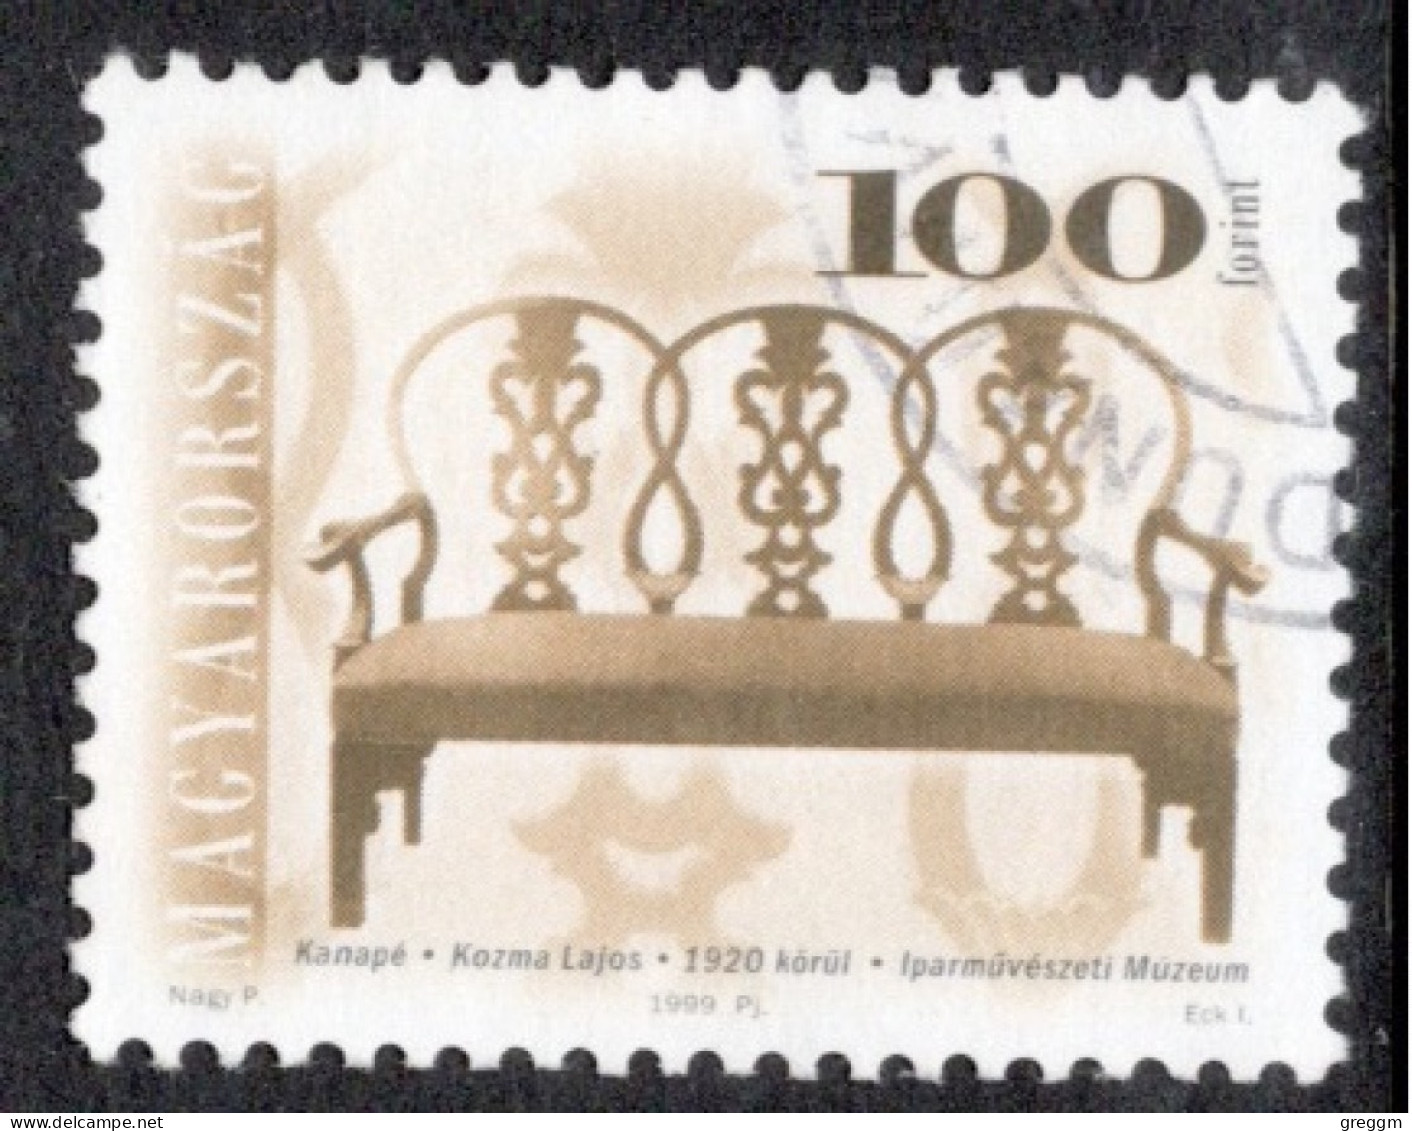 Hungary 1999  Single Stamp Celebrating Furniture In Fine Used - Usati